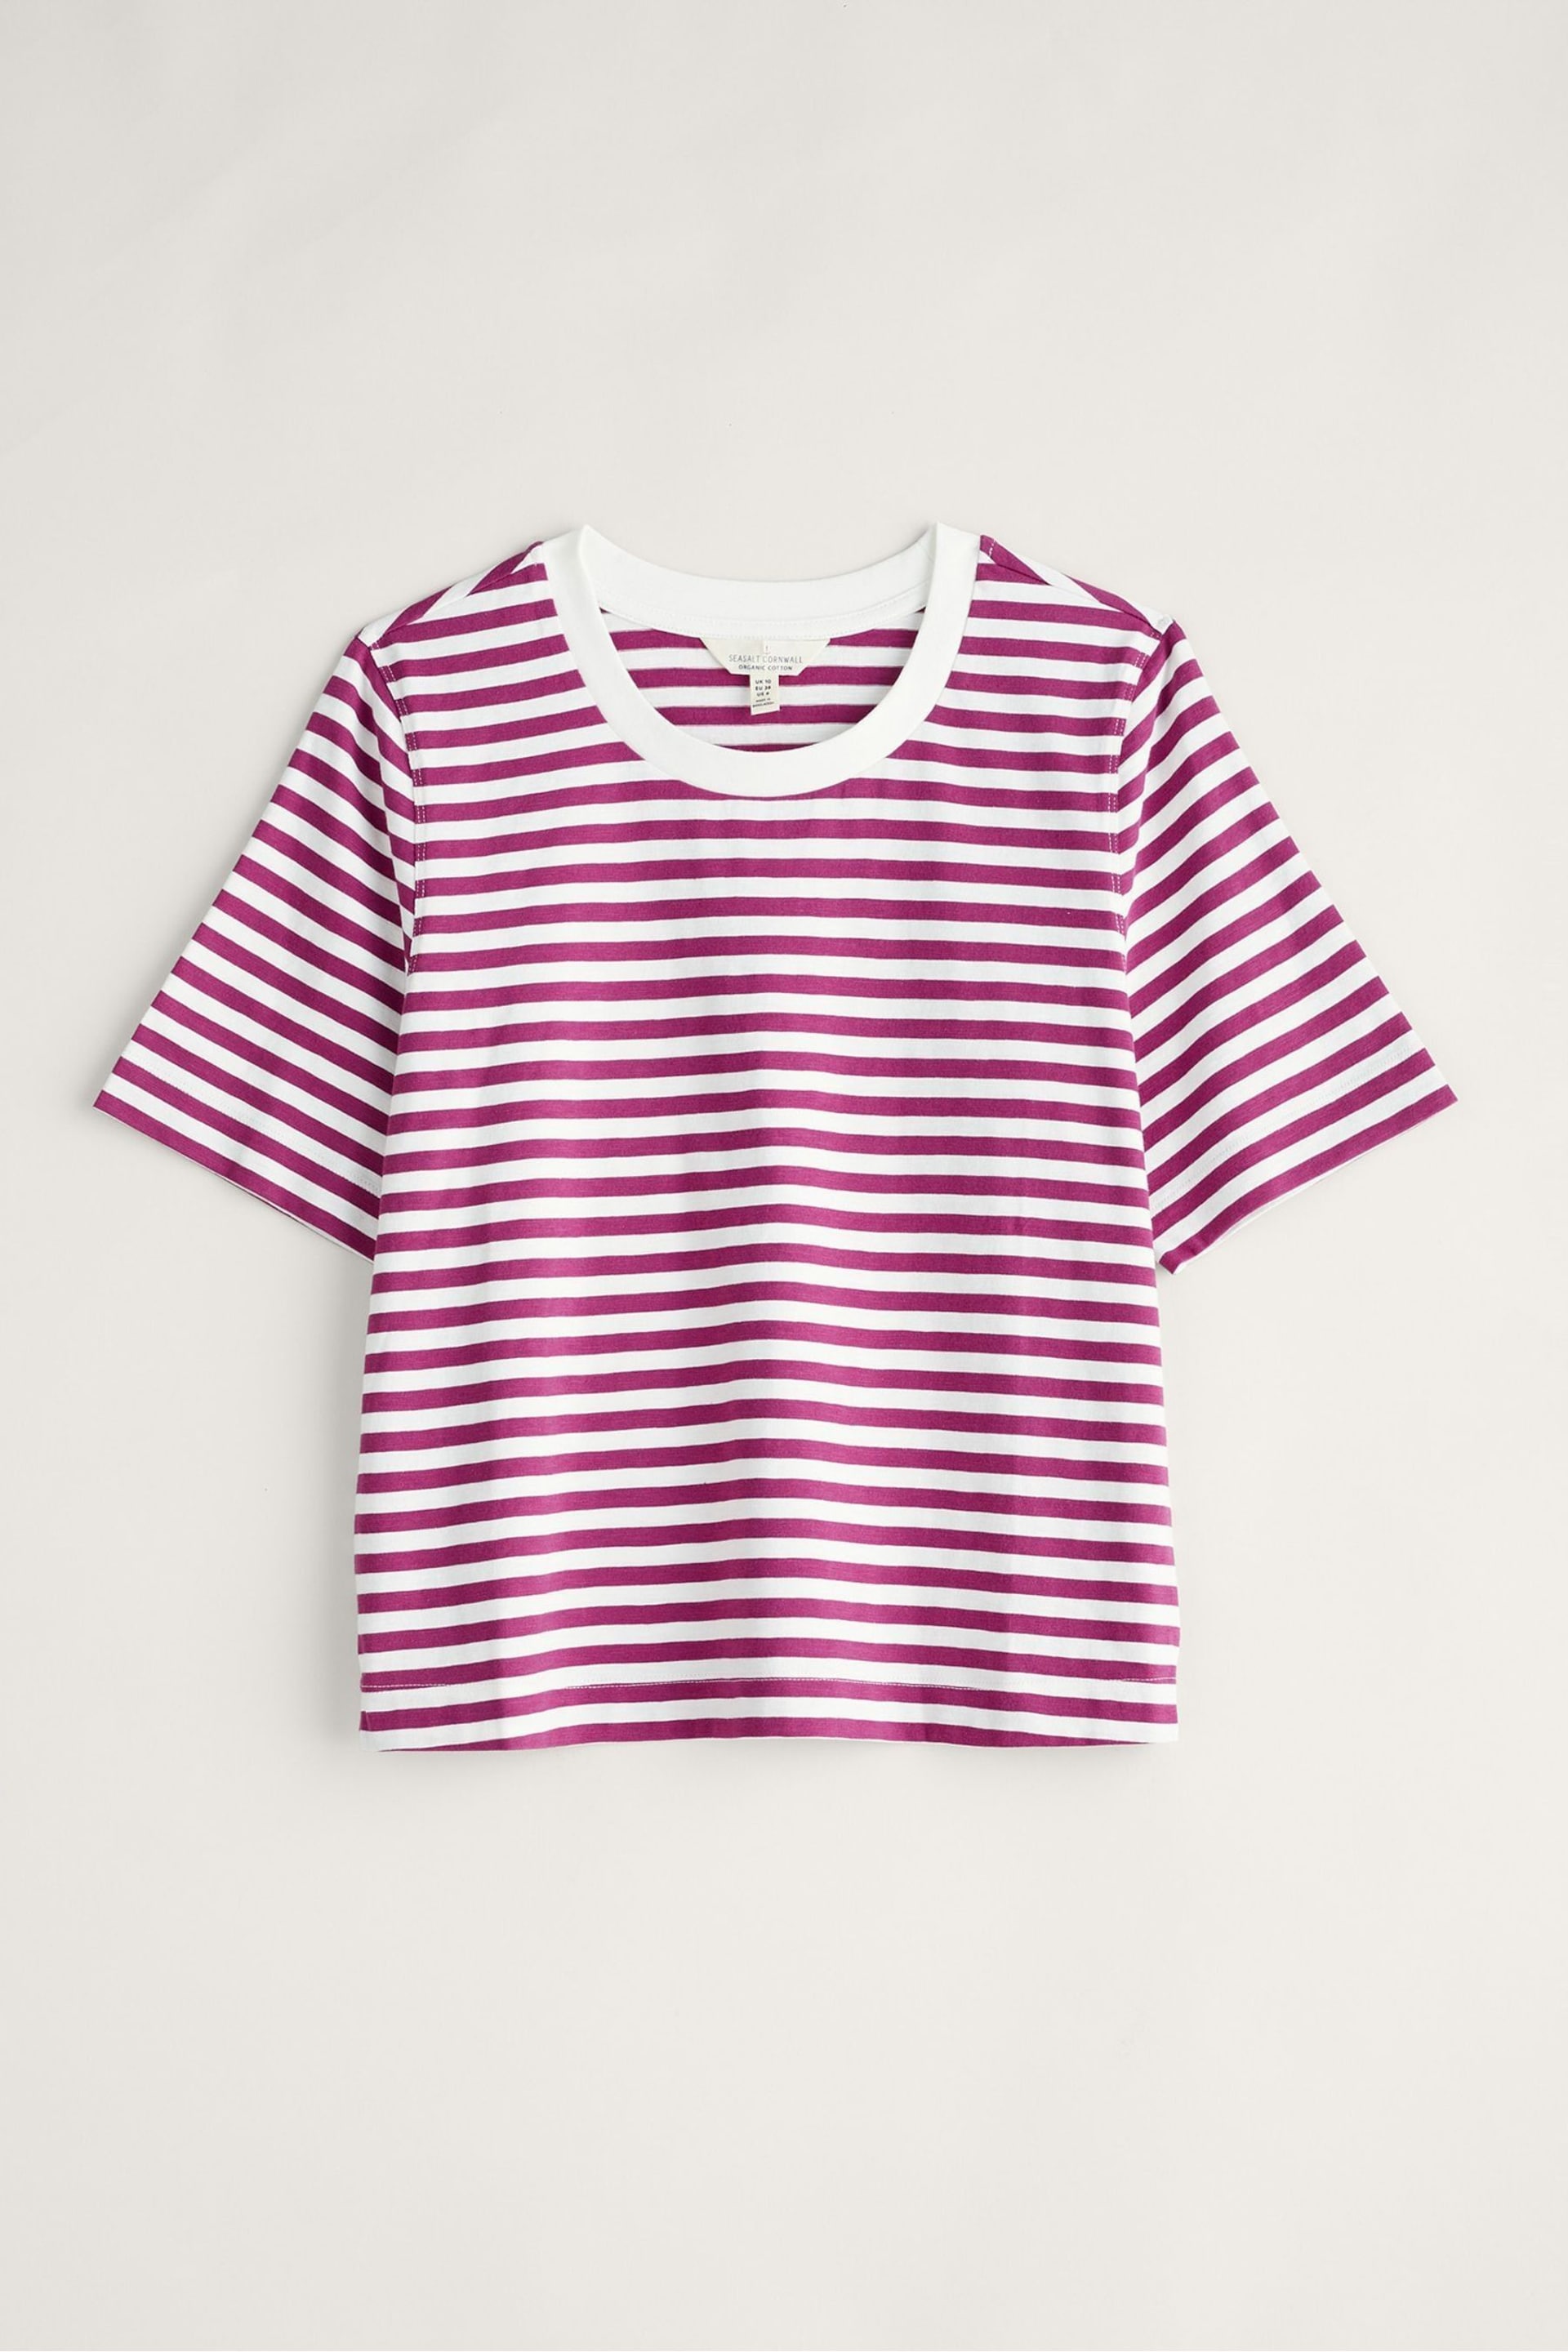 Seasalt Cornwall Pink Copseland T-Shirt - Image 4 of 5